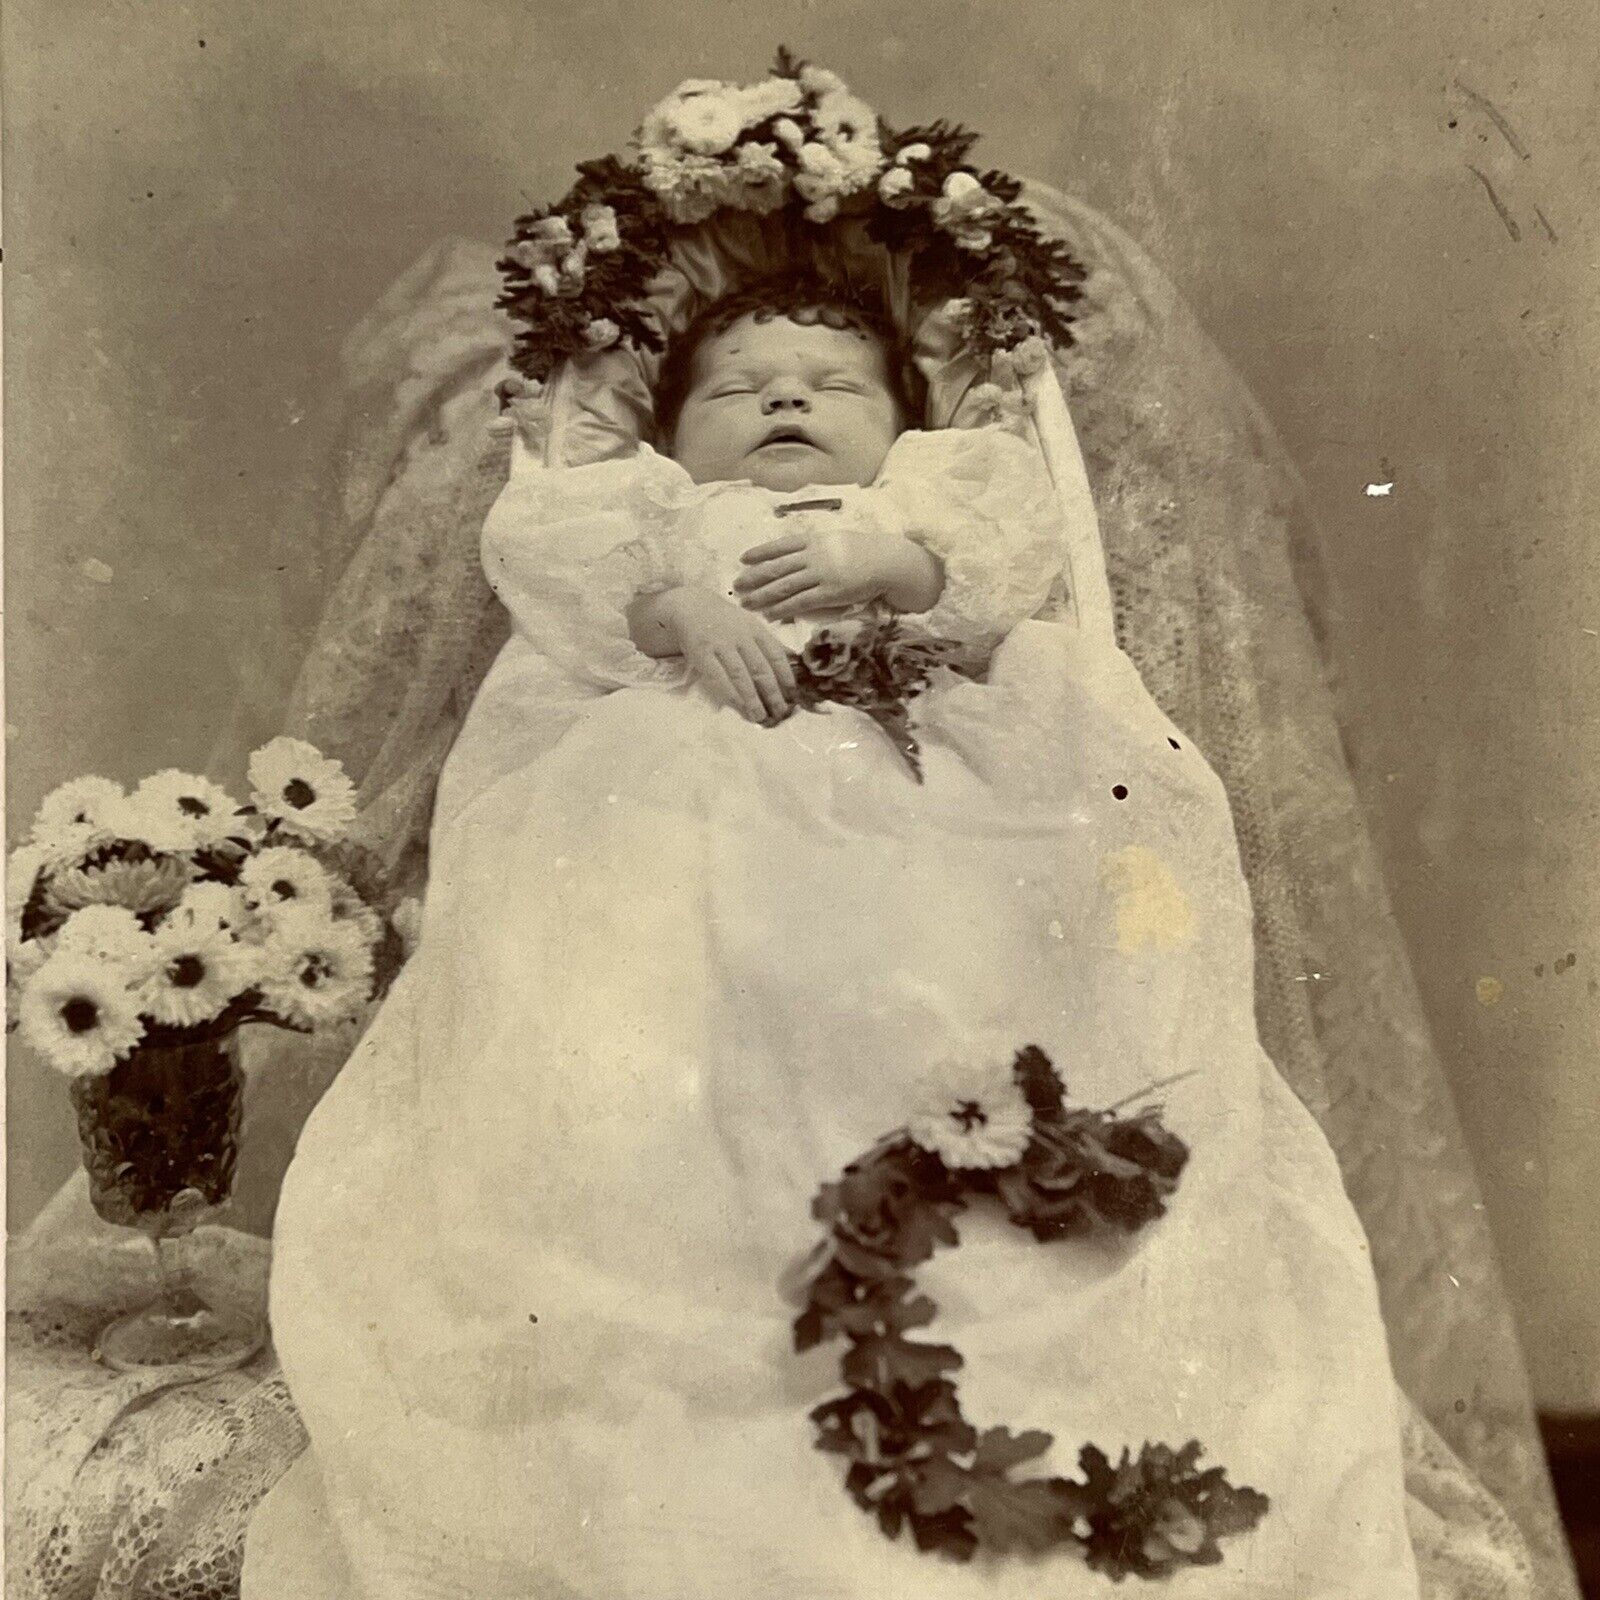 Antique Cabinet Card Photograph Post Mortem Baby Child Casket Flowers Camden MI